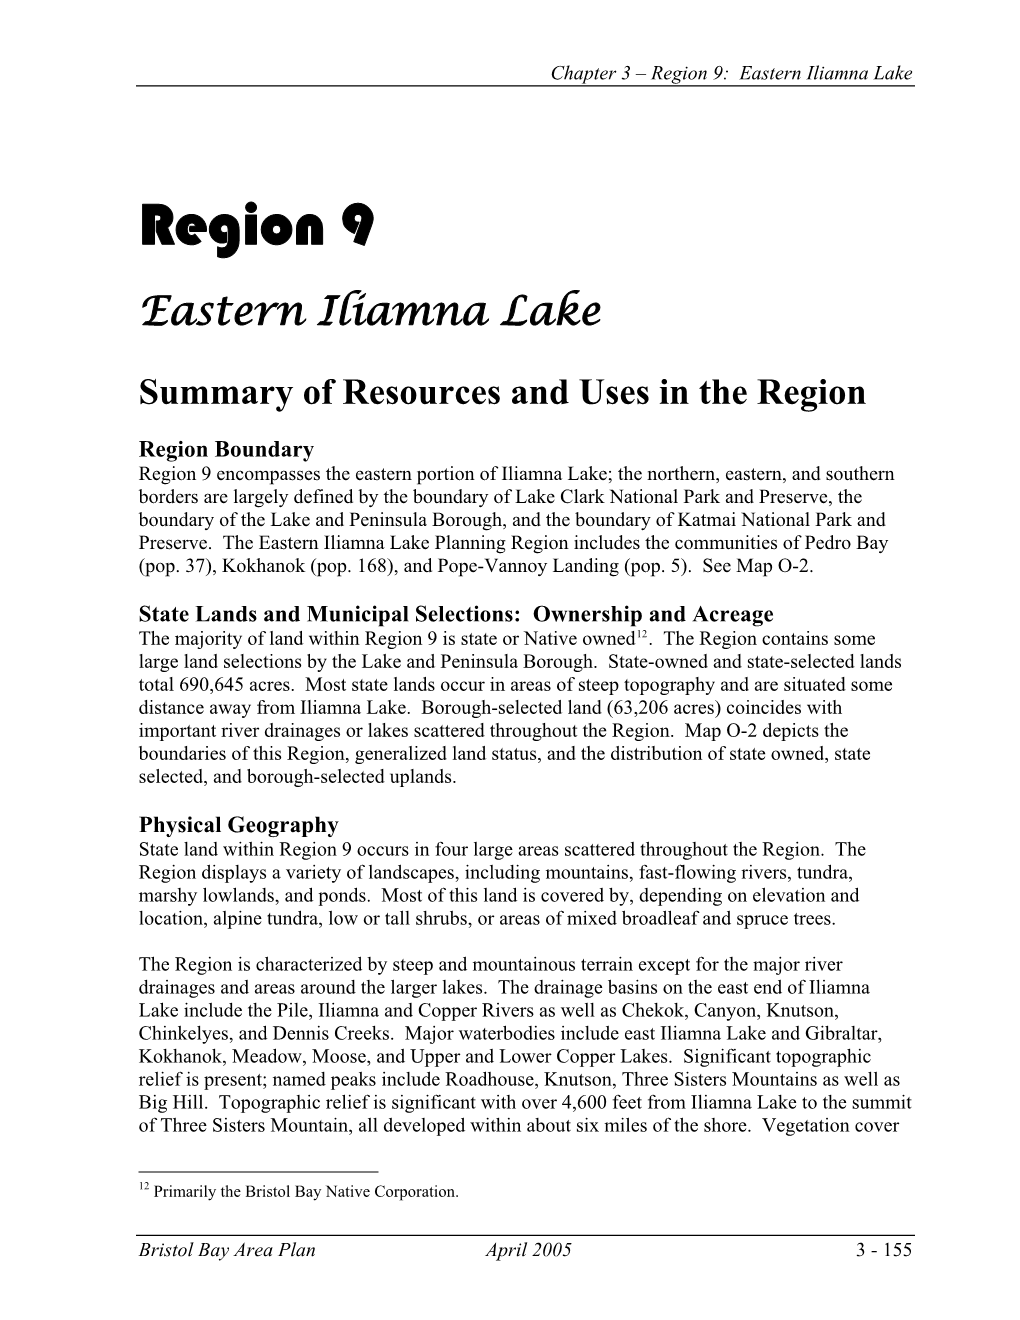 Region 9: Eastern Iliamna Lake